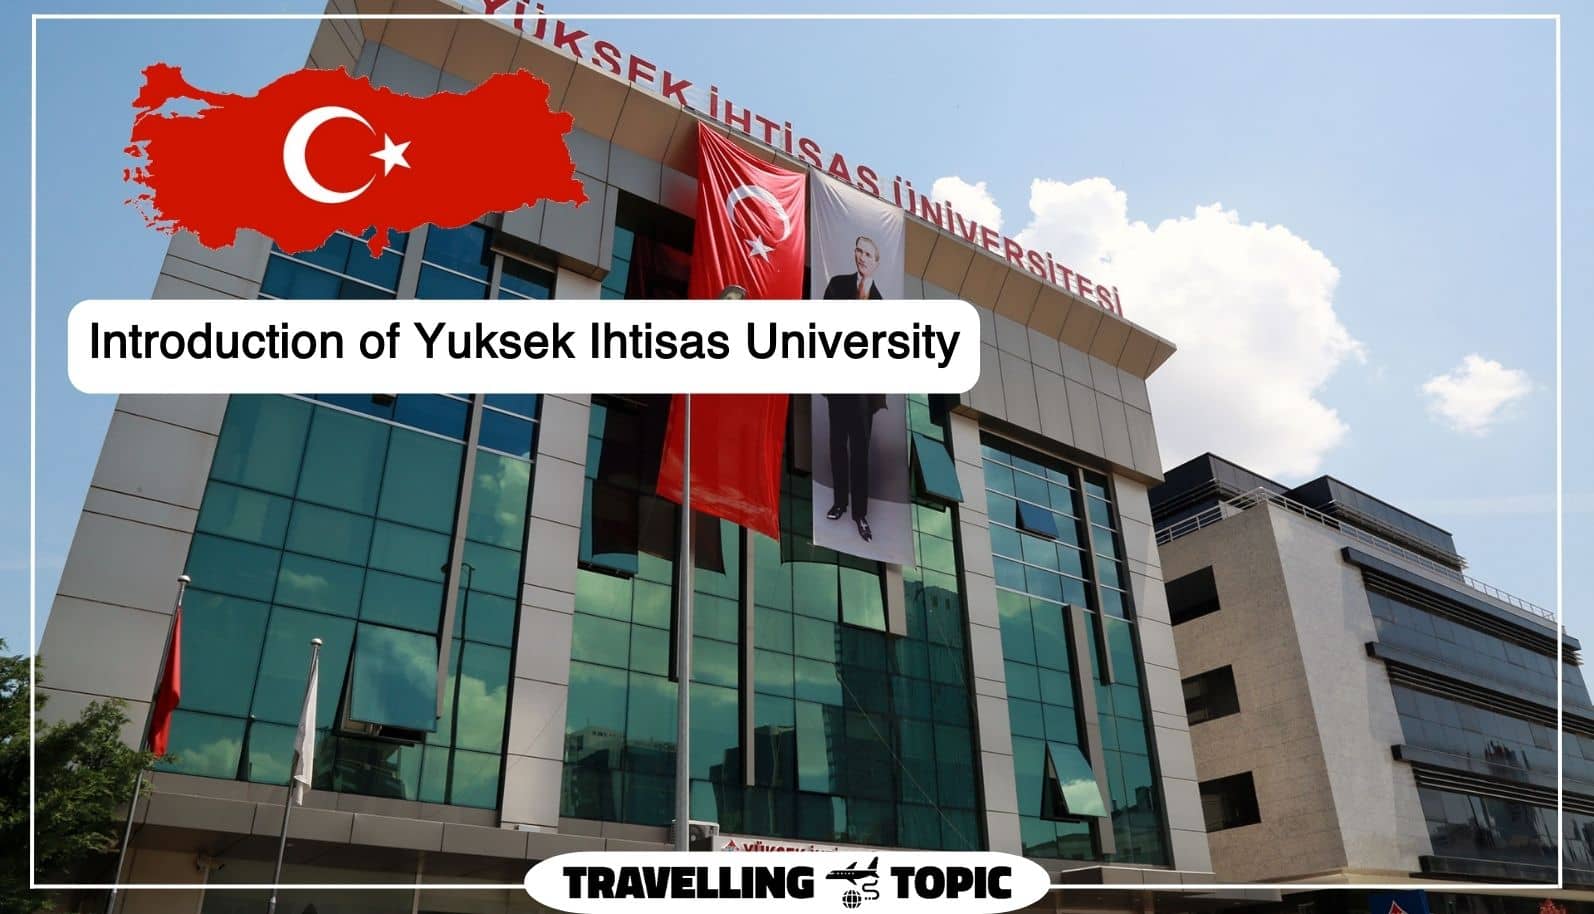 Introduction of Yuksek Ihtisas University